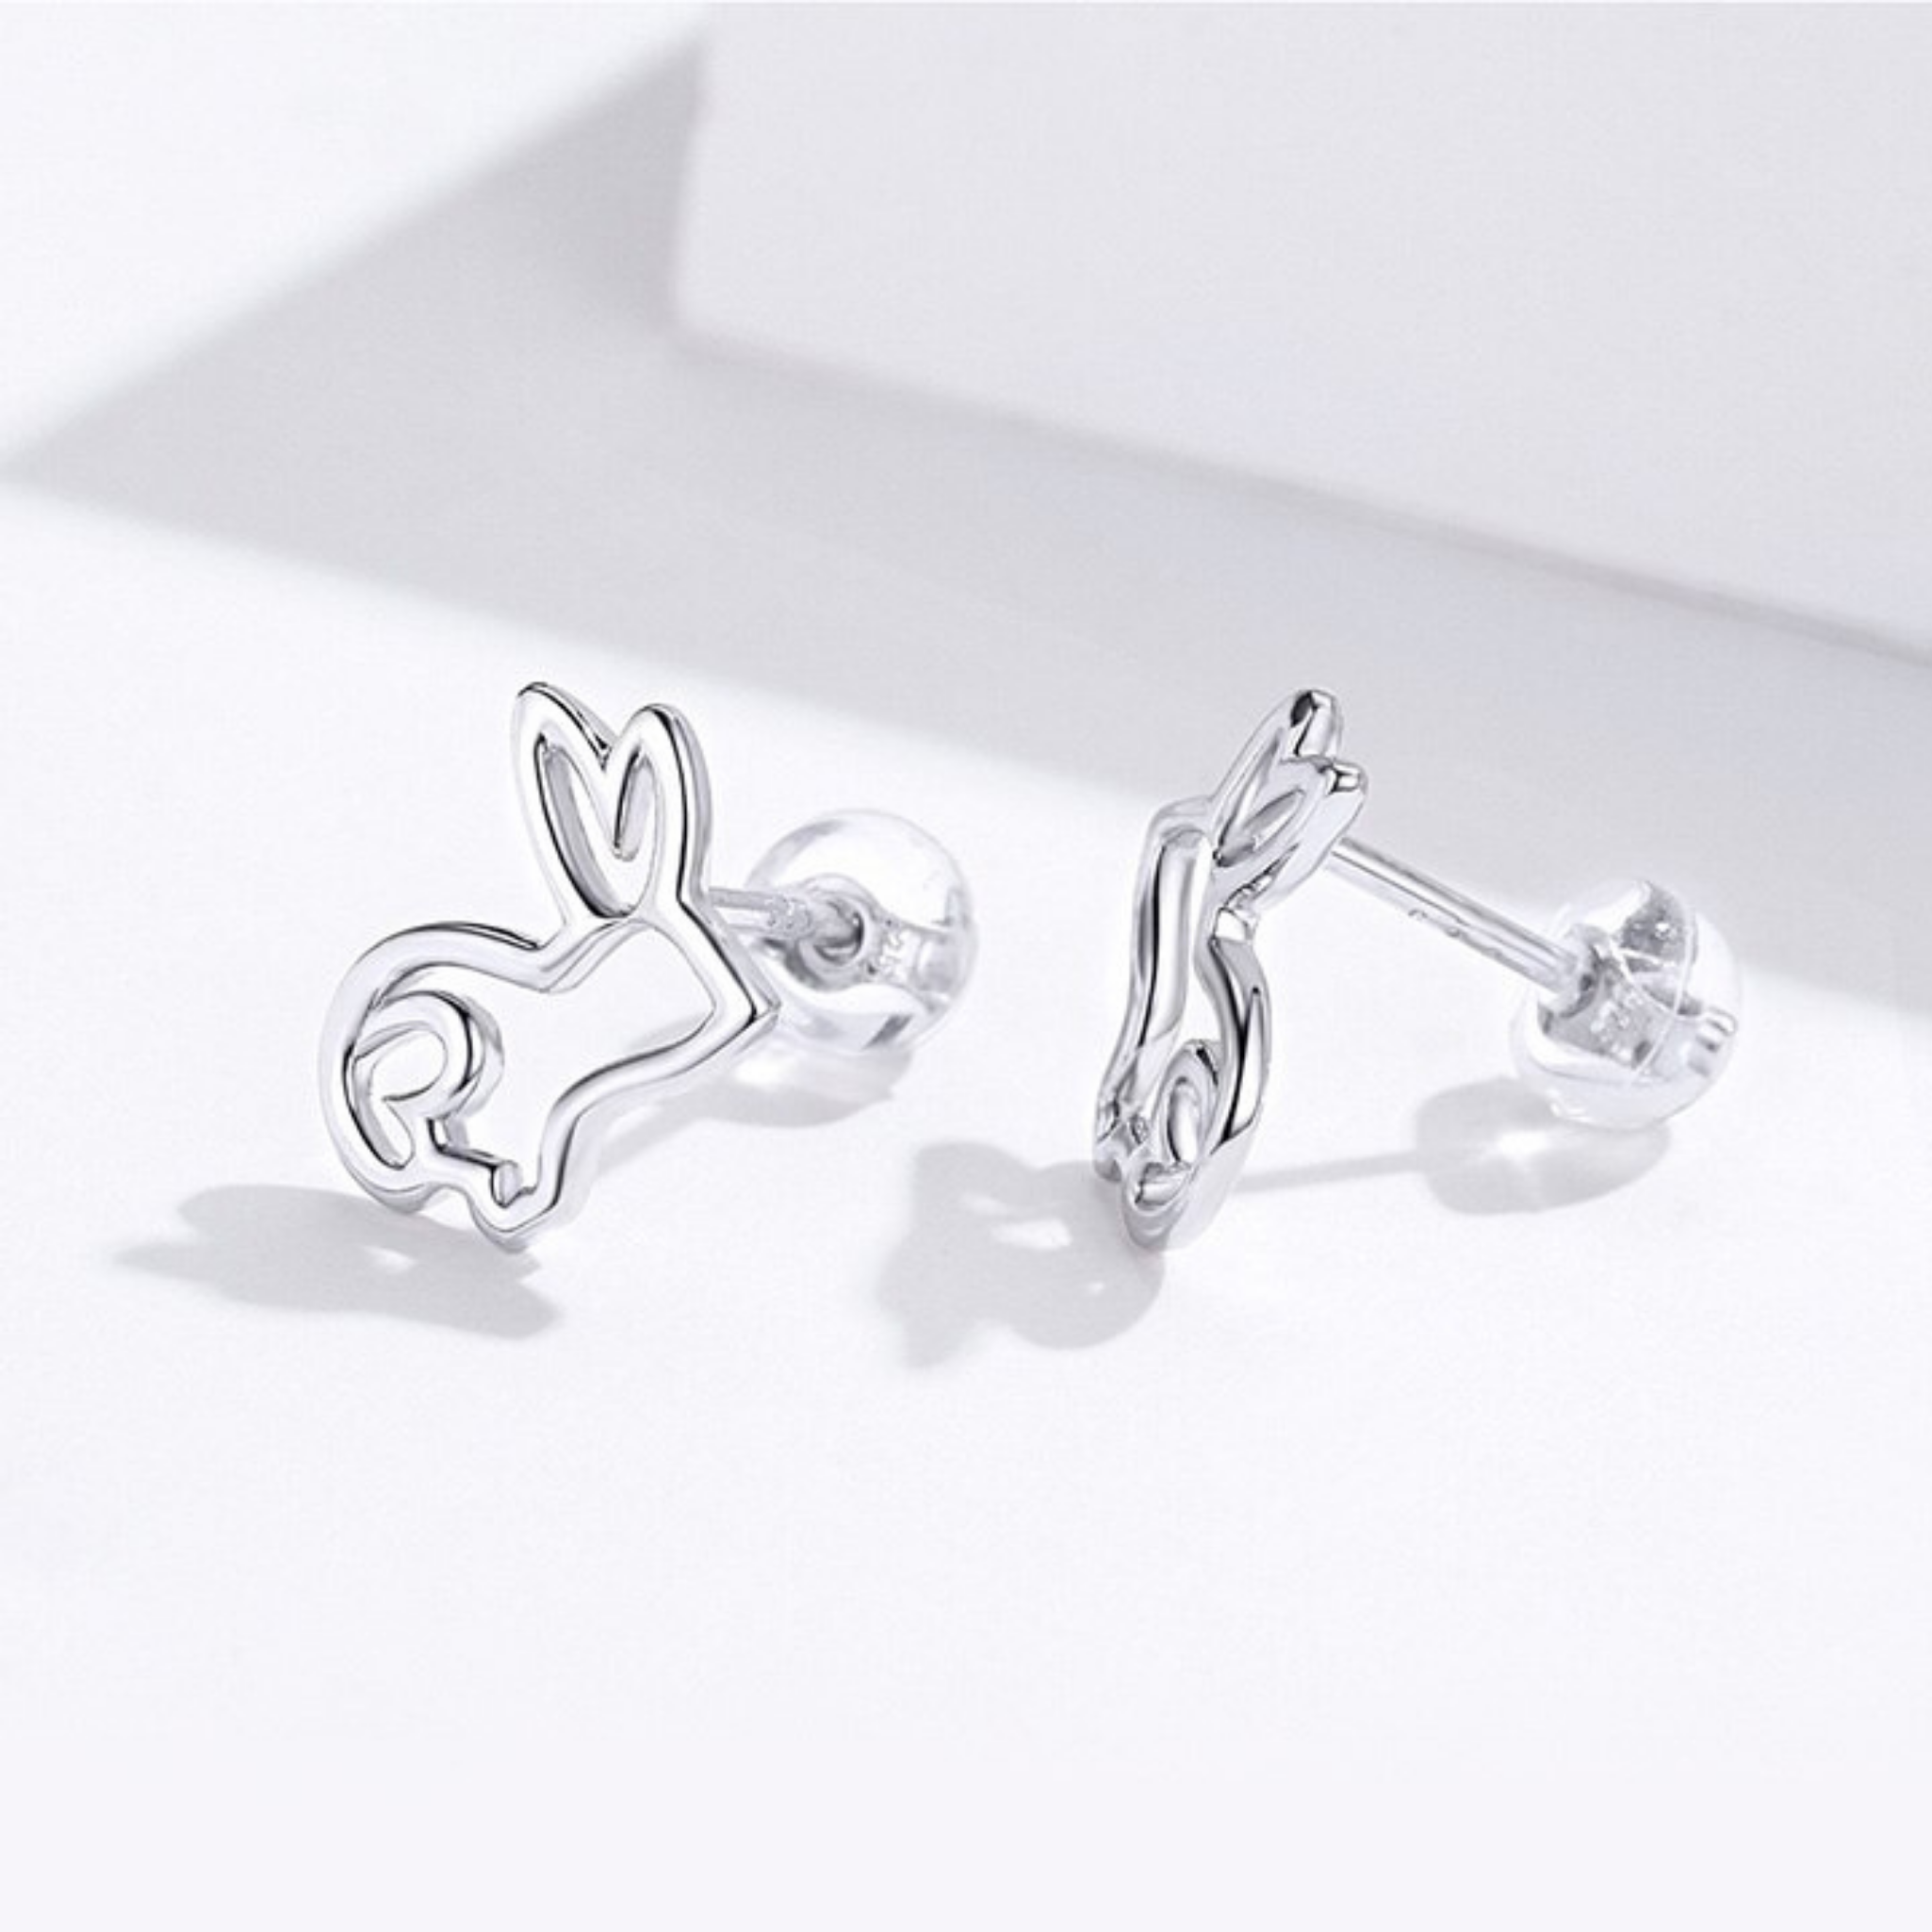 Bunny Doodle Earrings